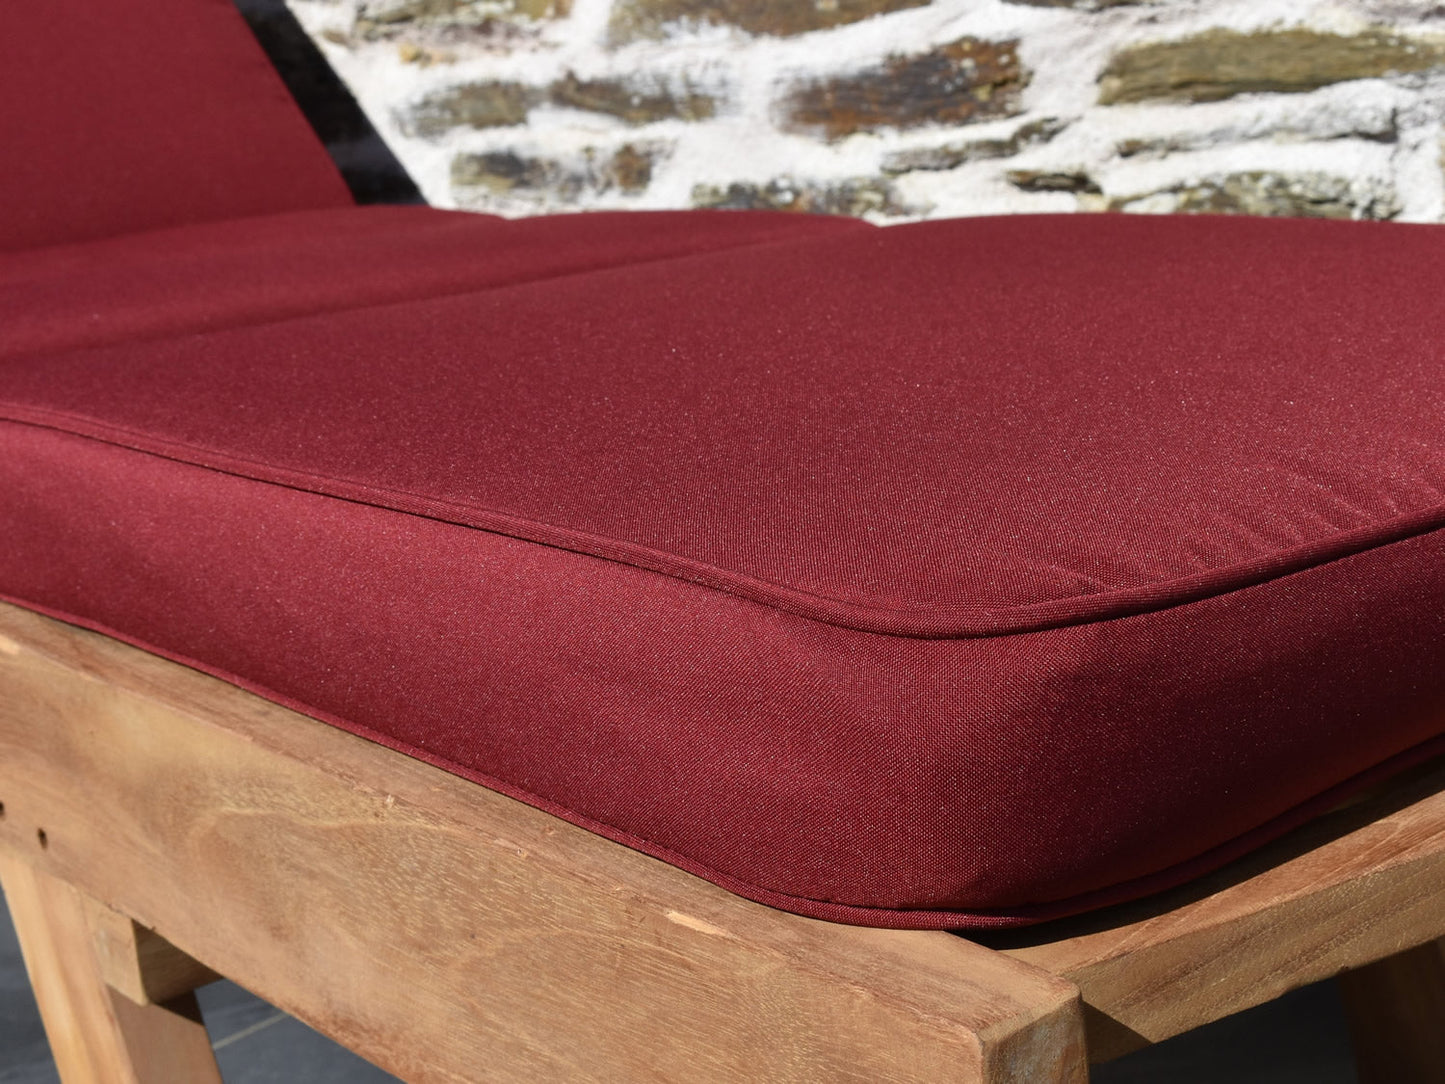 close-up detail of burgundy sun lounger cushion fabric